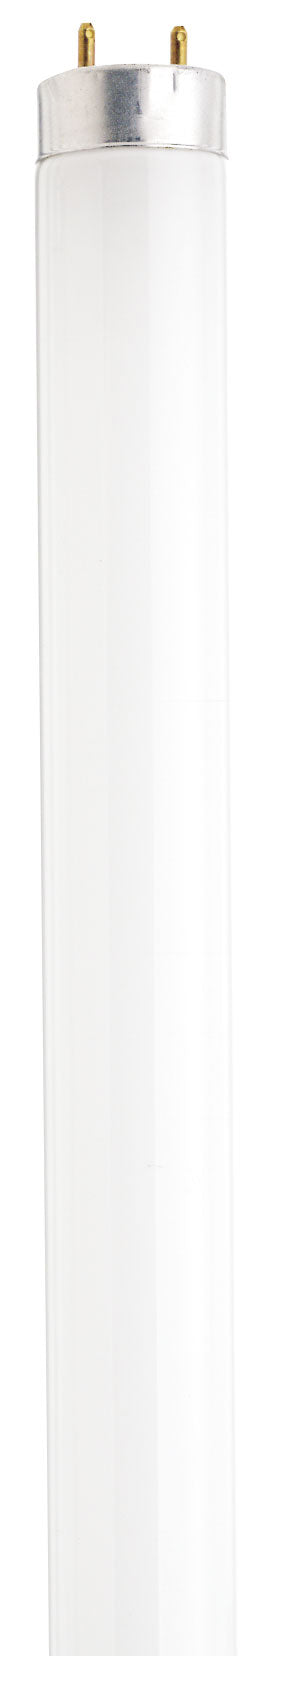 SATCO/NUVO 17W T8 Fluorescent 3000K Warm White 82 CRI Medium Bi-Pin Base Shatterproof (S6523-TF)